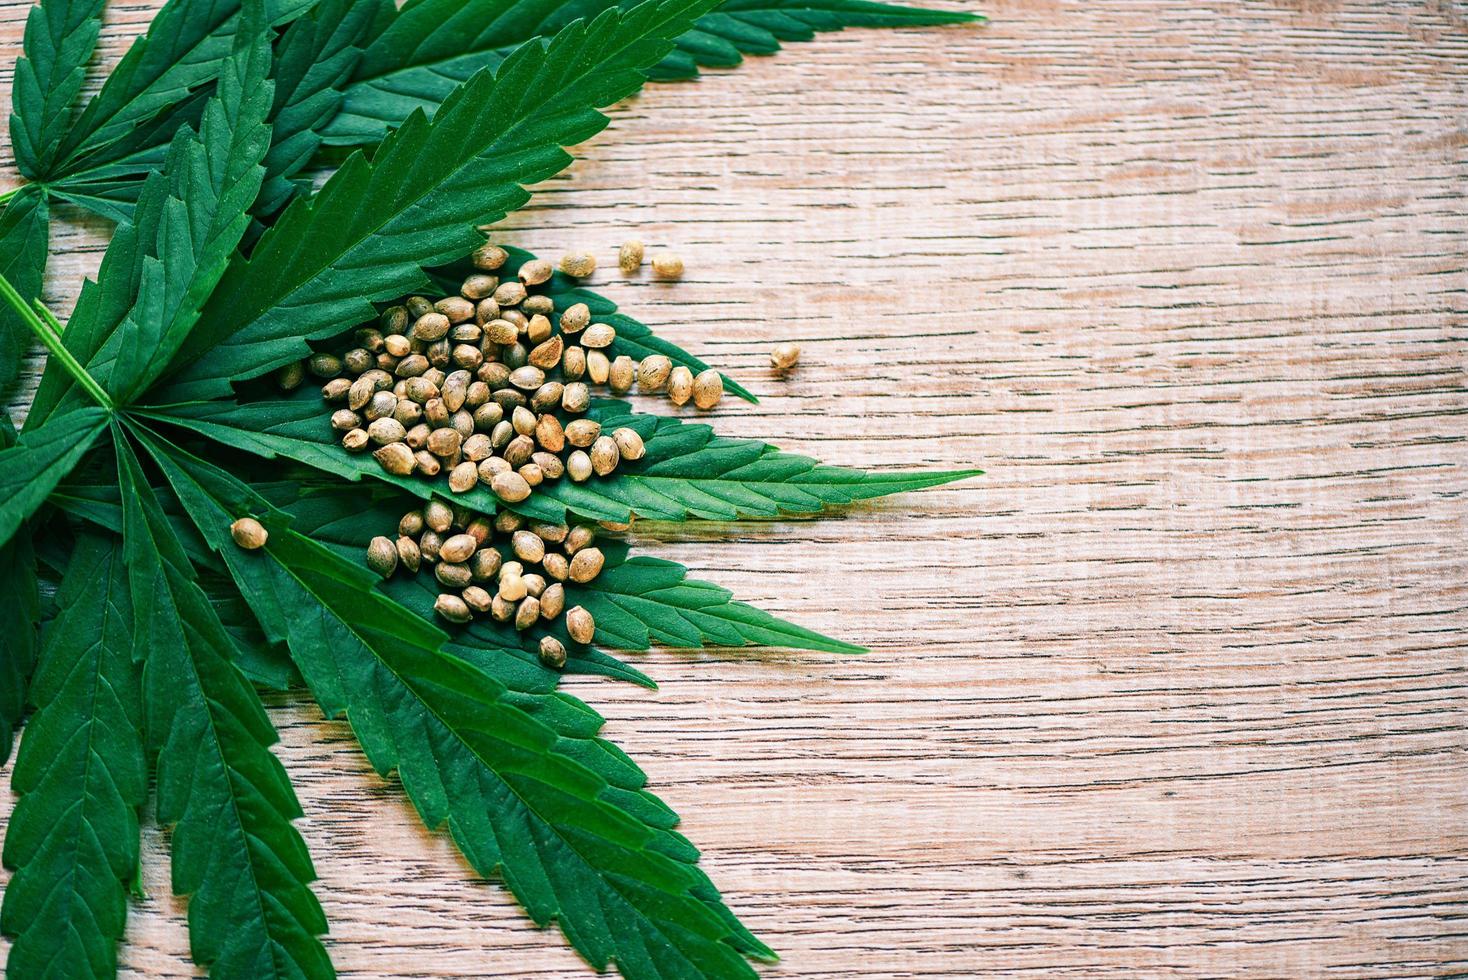 Marijuana seeds and marijuana leaf on wooden background top view - Cannabis seeds Hemp medical photo